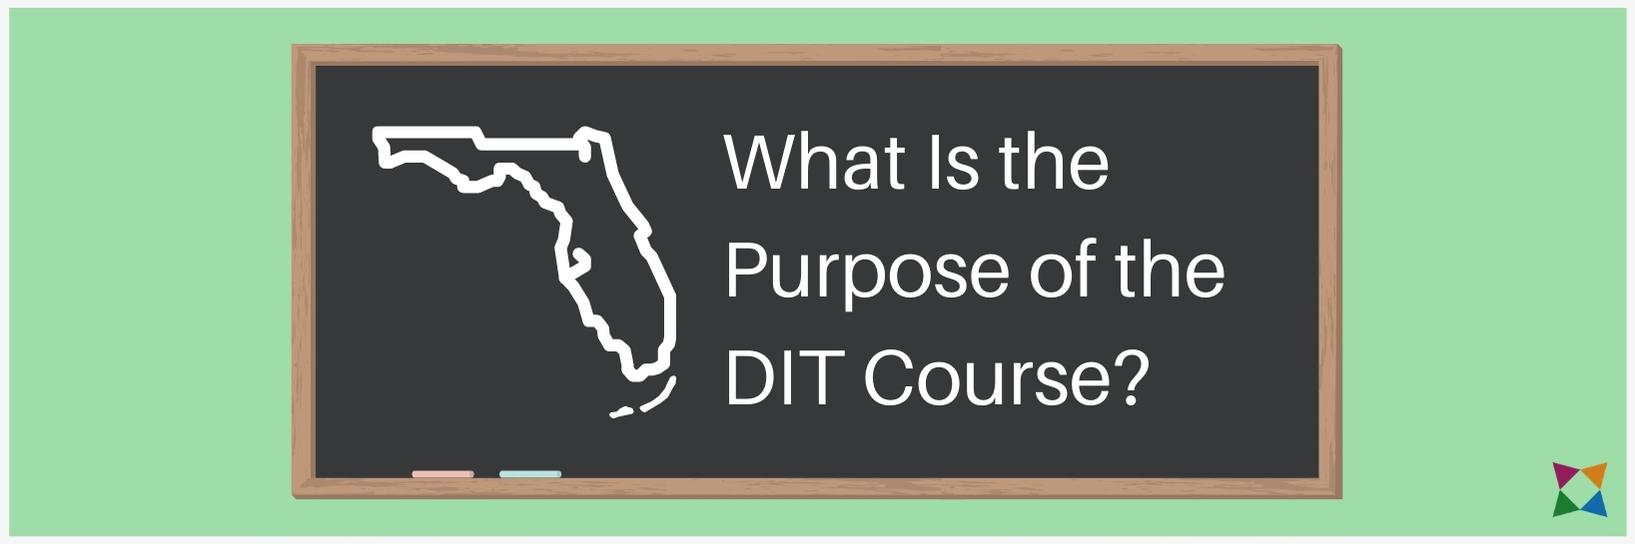 Florida Digital Information Technology Course Purpose